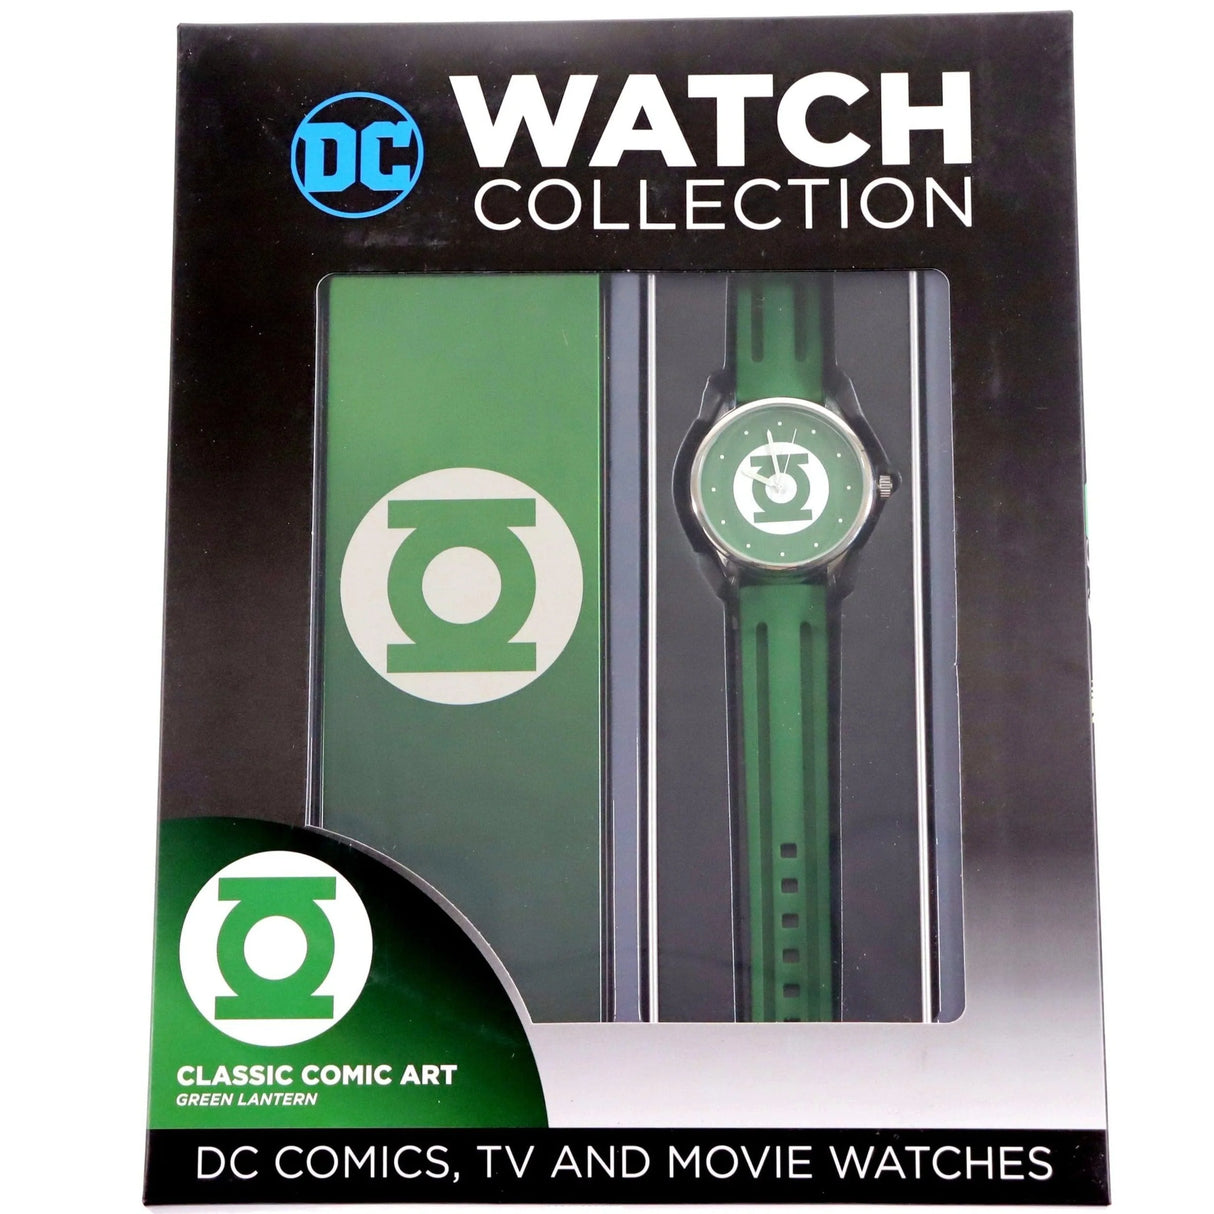 DC Comics Watch Collection: Green Lantern Classic Comic Art